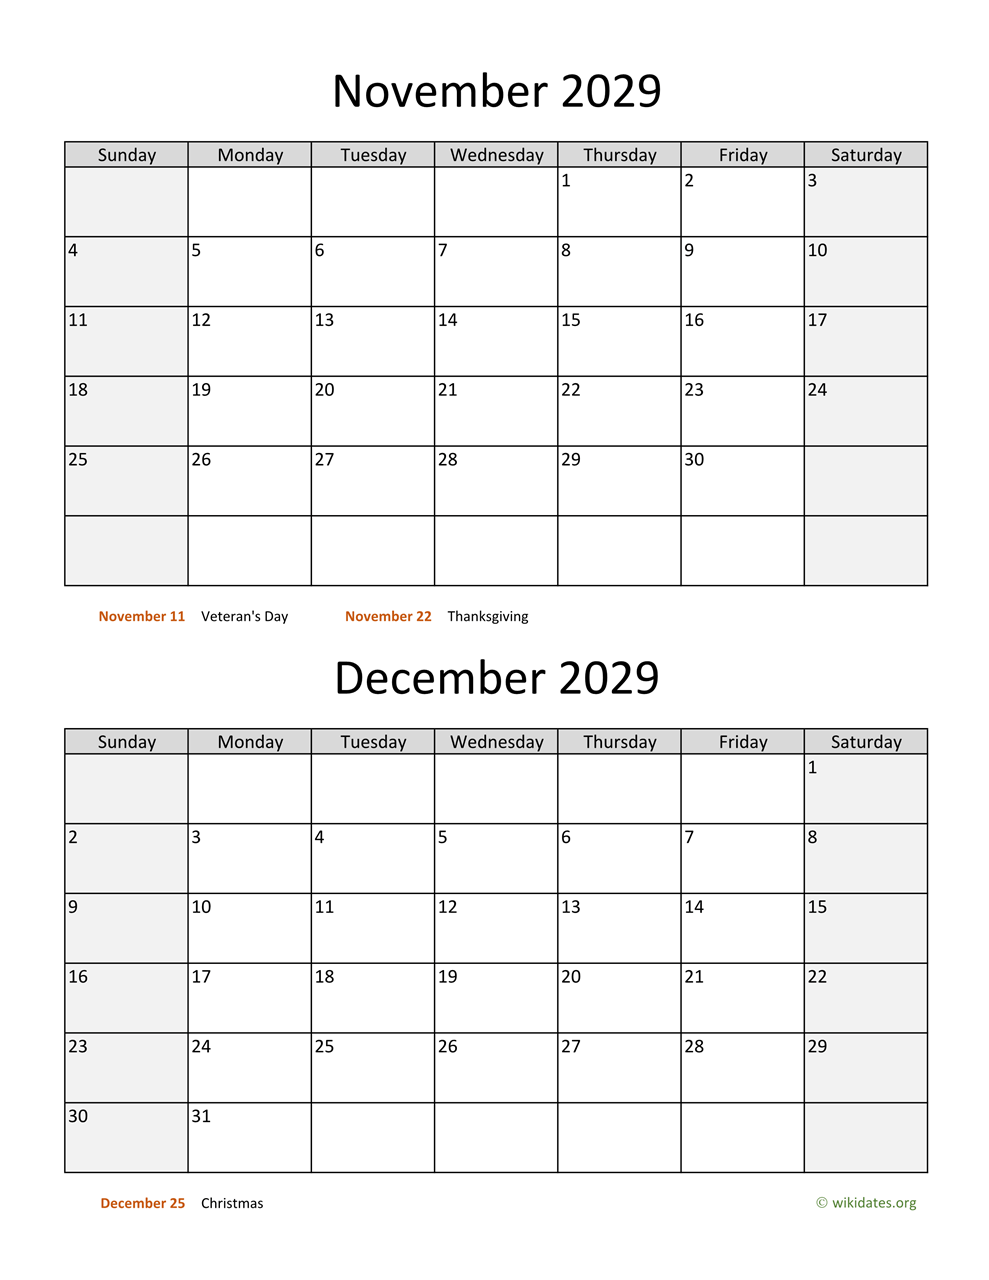 november-and-december-2029-calendar-wikidates